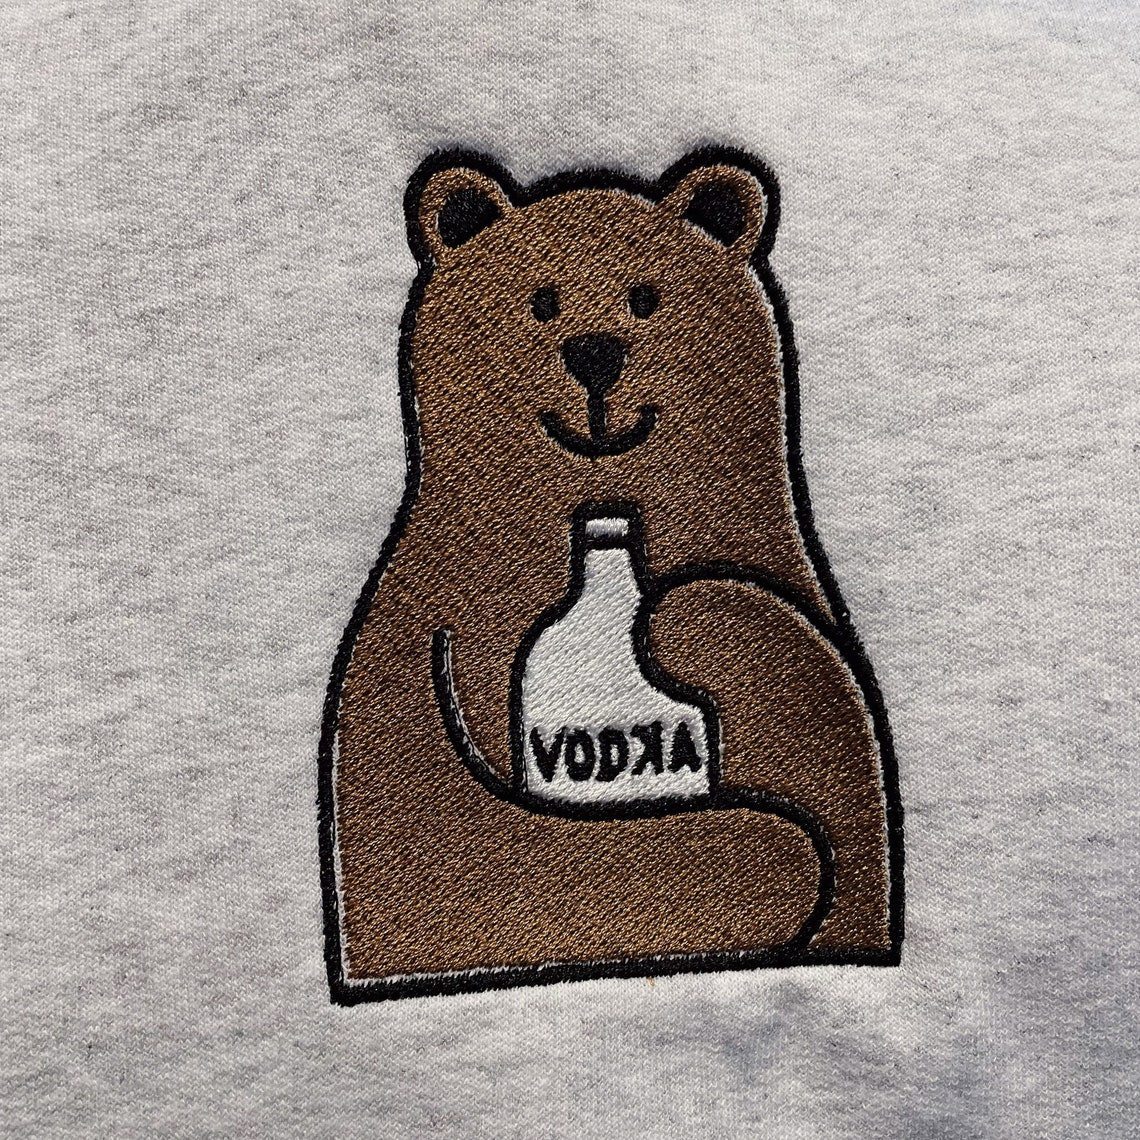 Bear With Vodka Embroidered Crewneck Sweatshirt